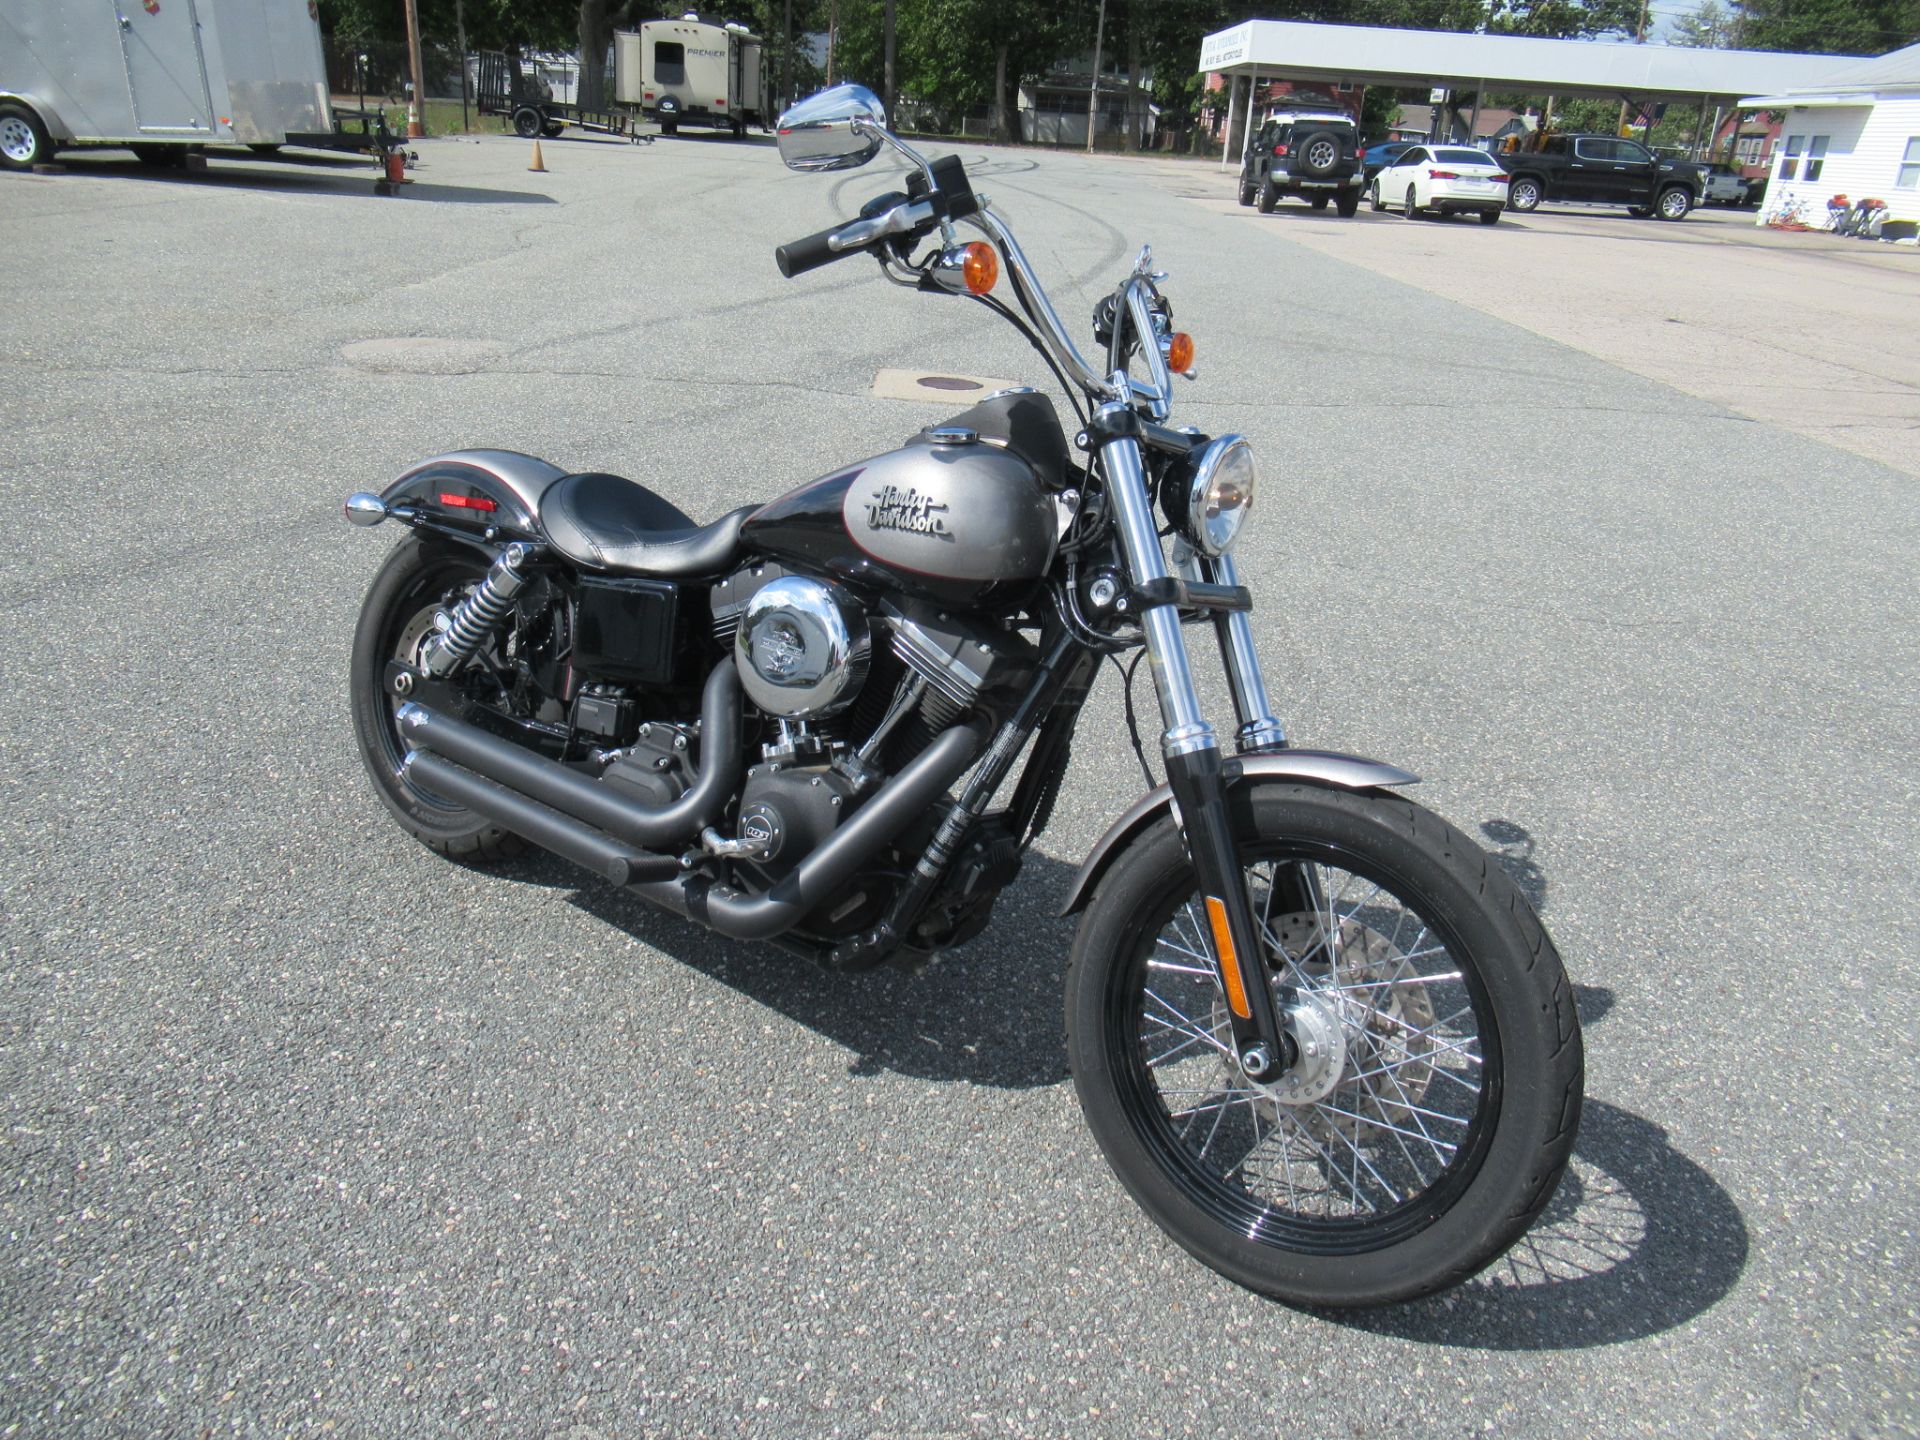 2016 Harley-Davidson Street Bob® in Springfield, Massachusetts - Photo 2